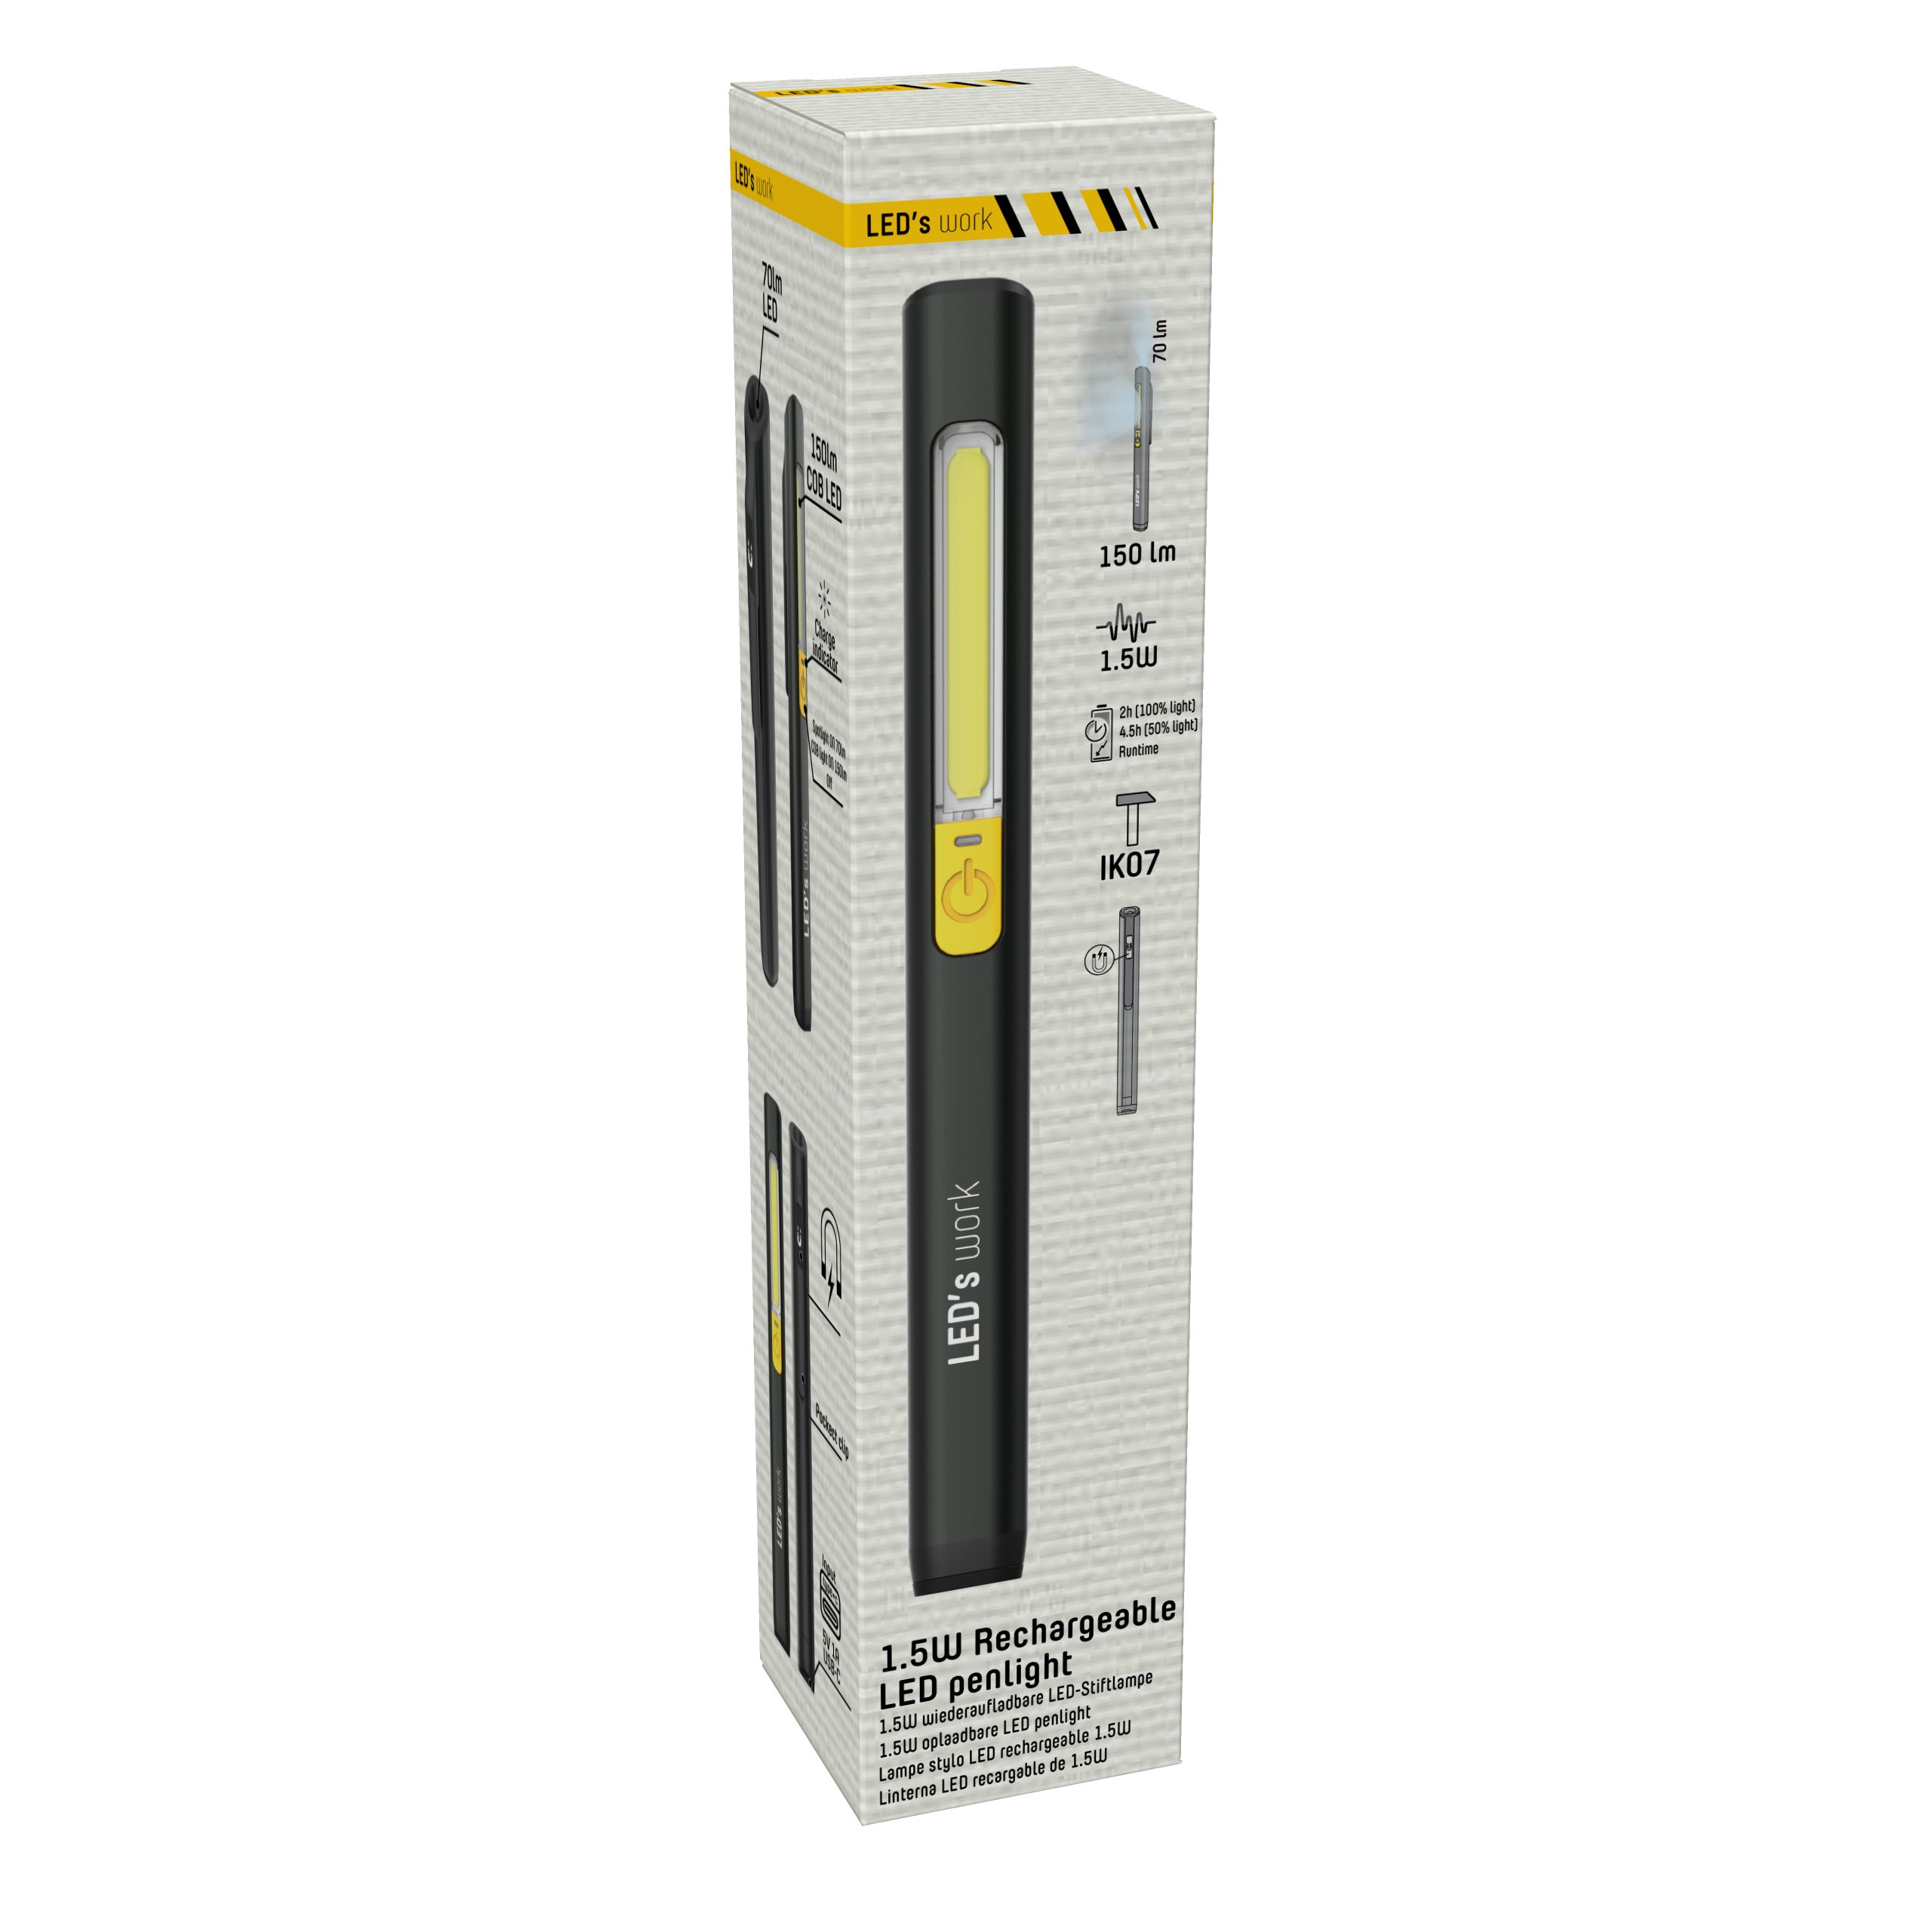 Akku LED, light 1,5W Pen 0710319 Arbeitsleuchte LED-Stiftleuchte, kaltweiß LED LED's work